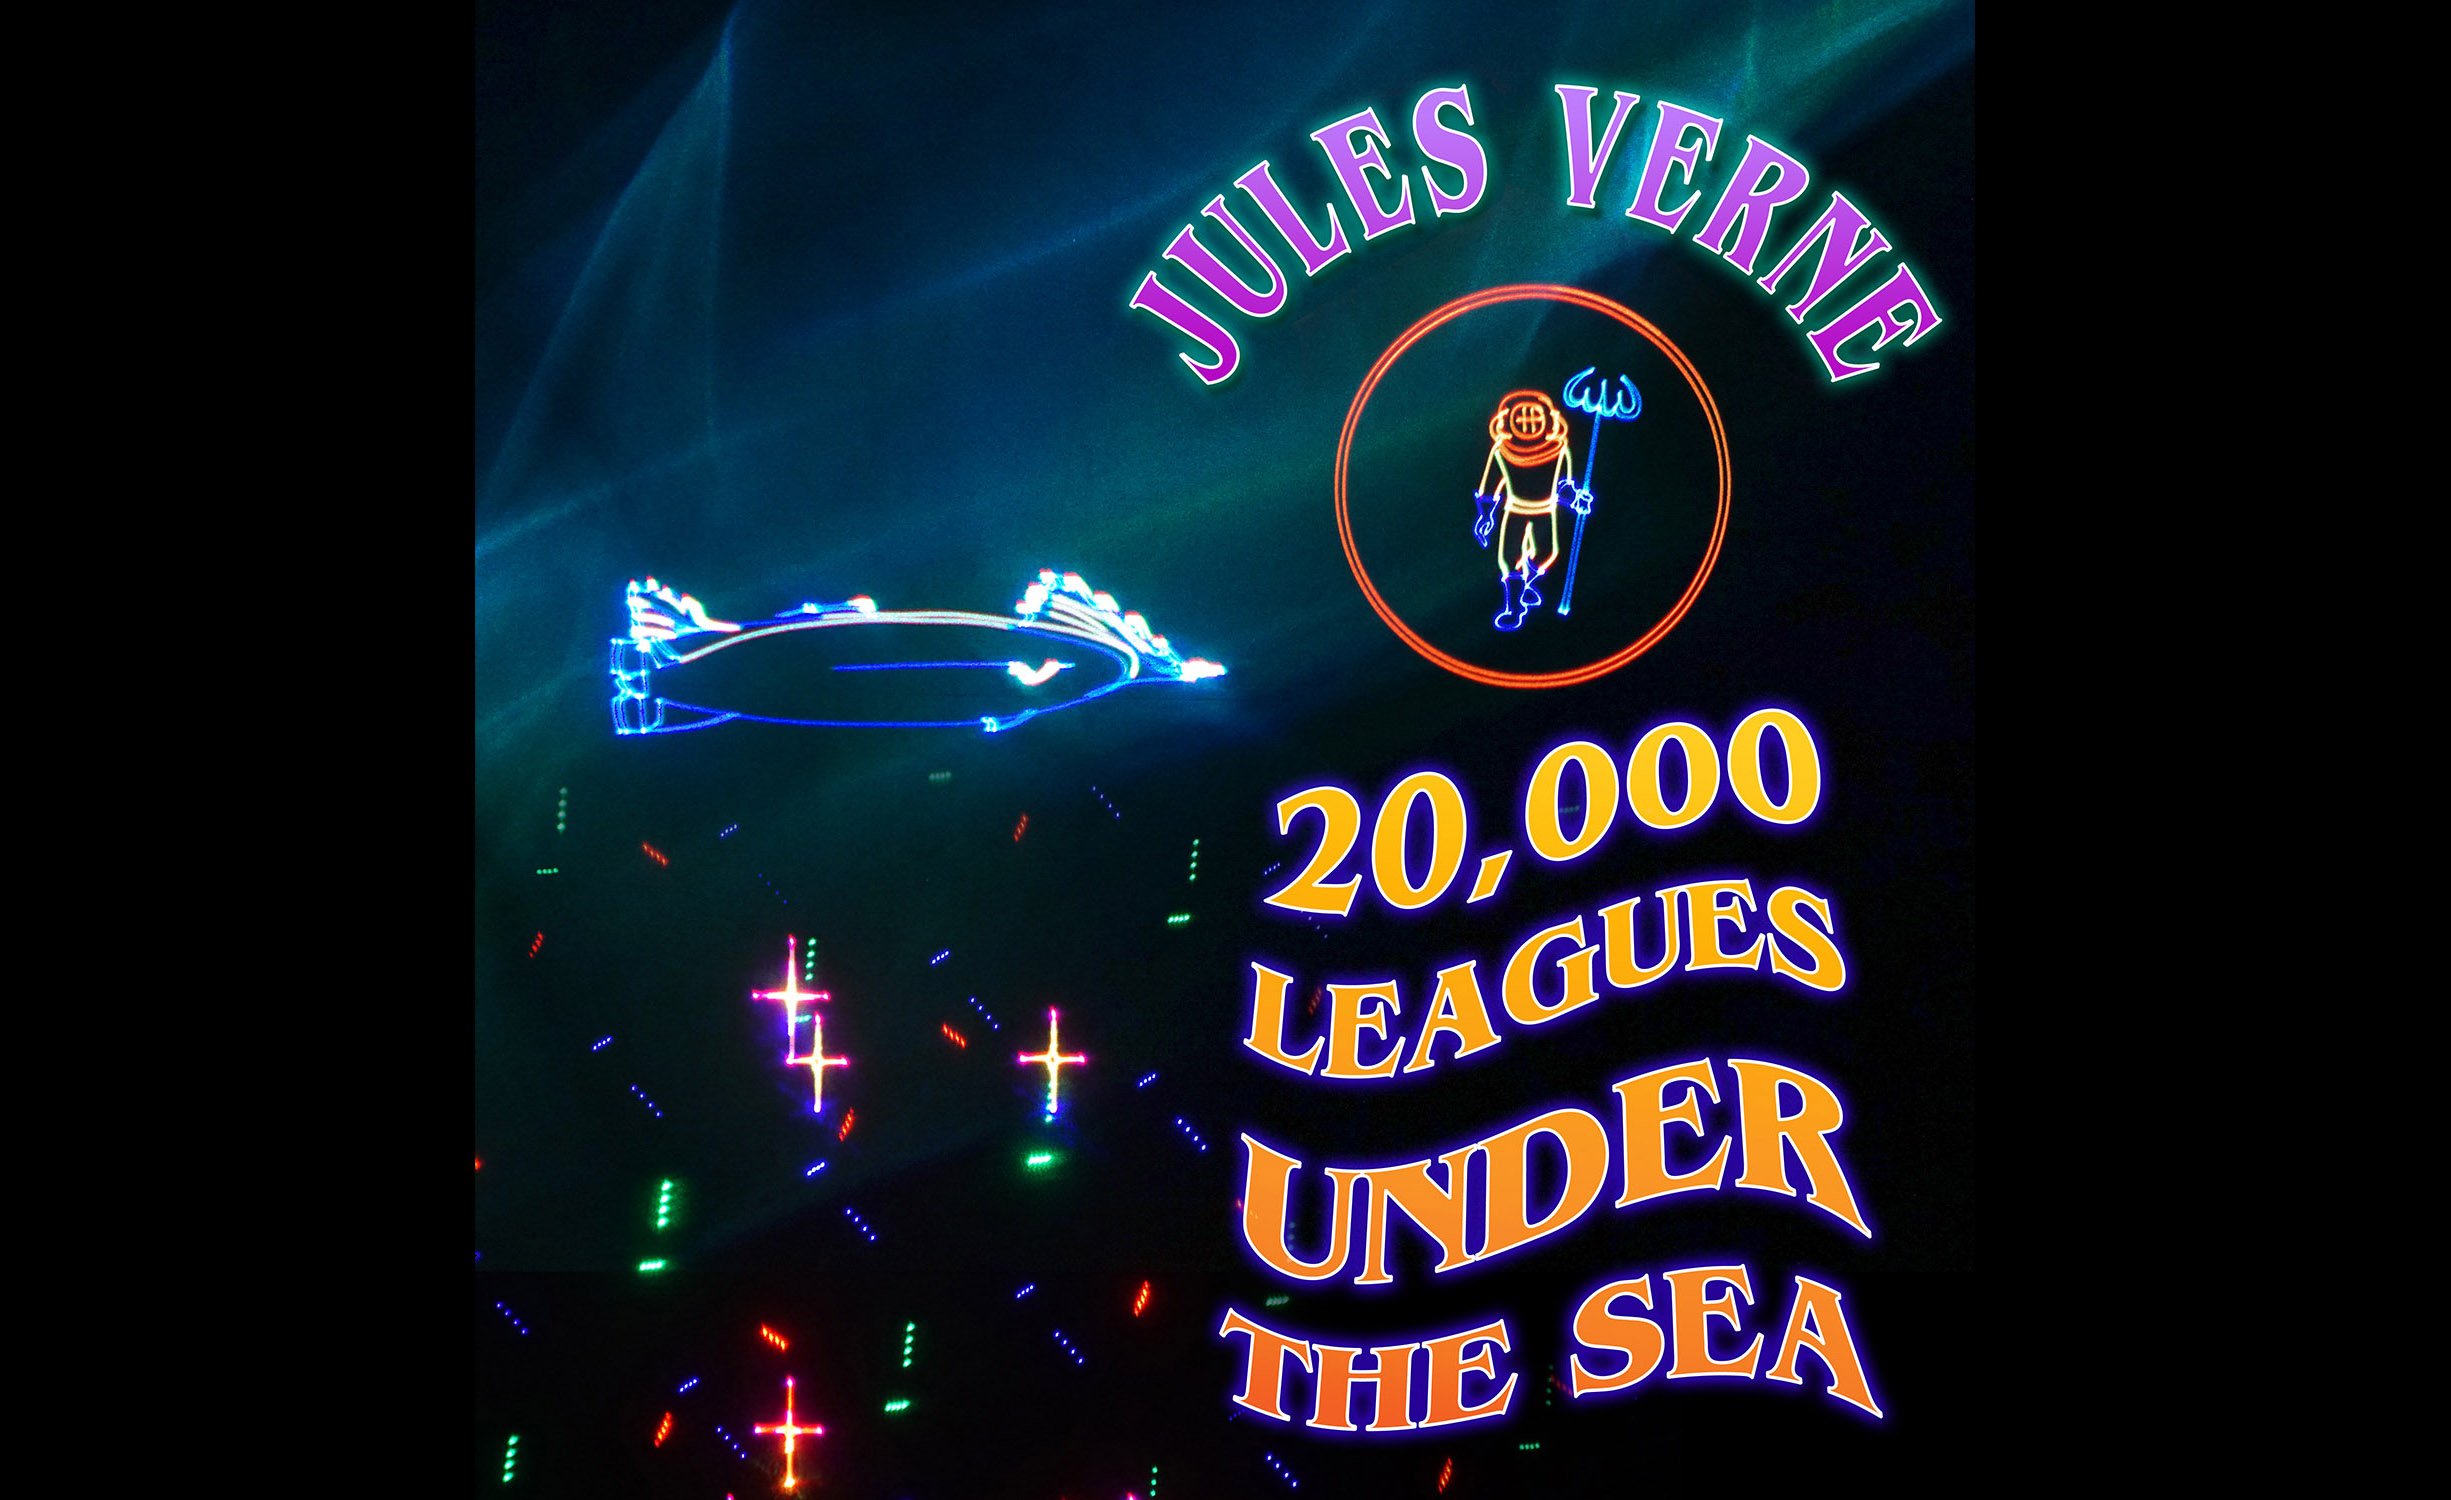 Jules Verne 20,000 Leagues Under the Sea logo